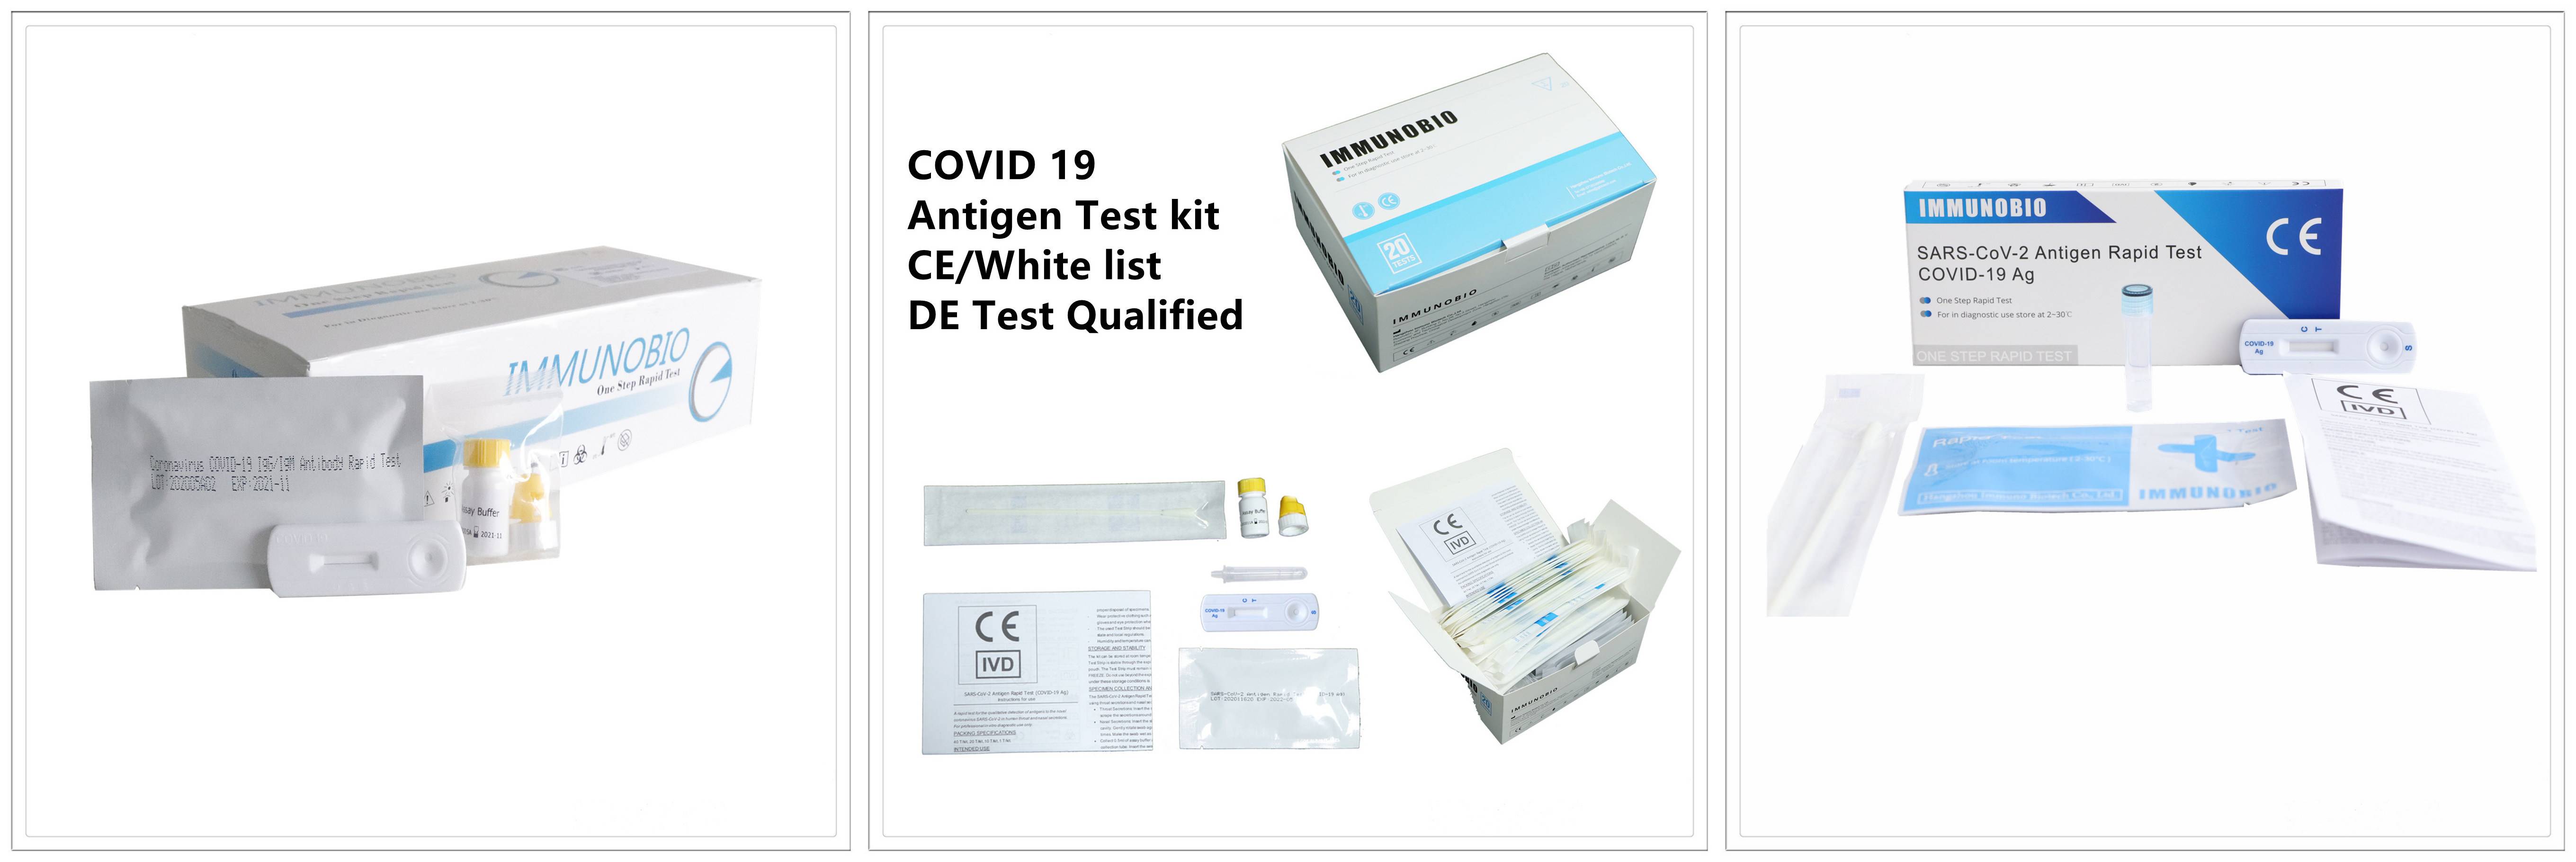 At-Home OTC COVID-19 Diagnostic Tests | FDA